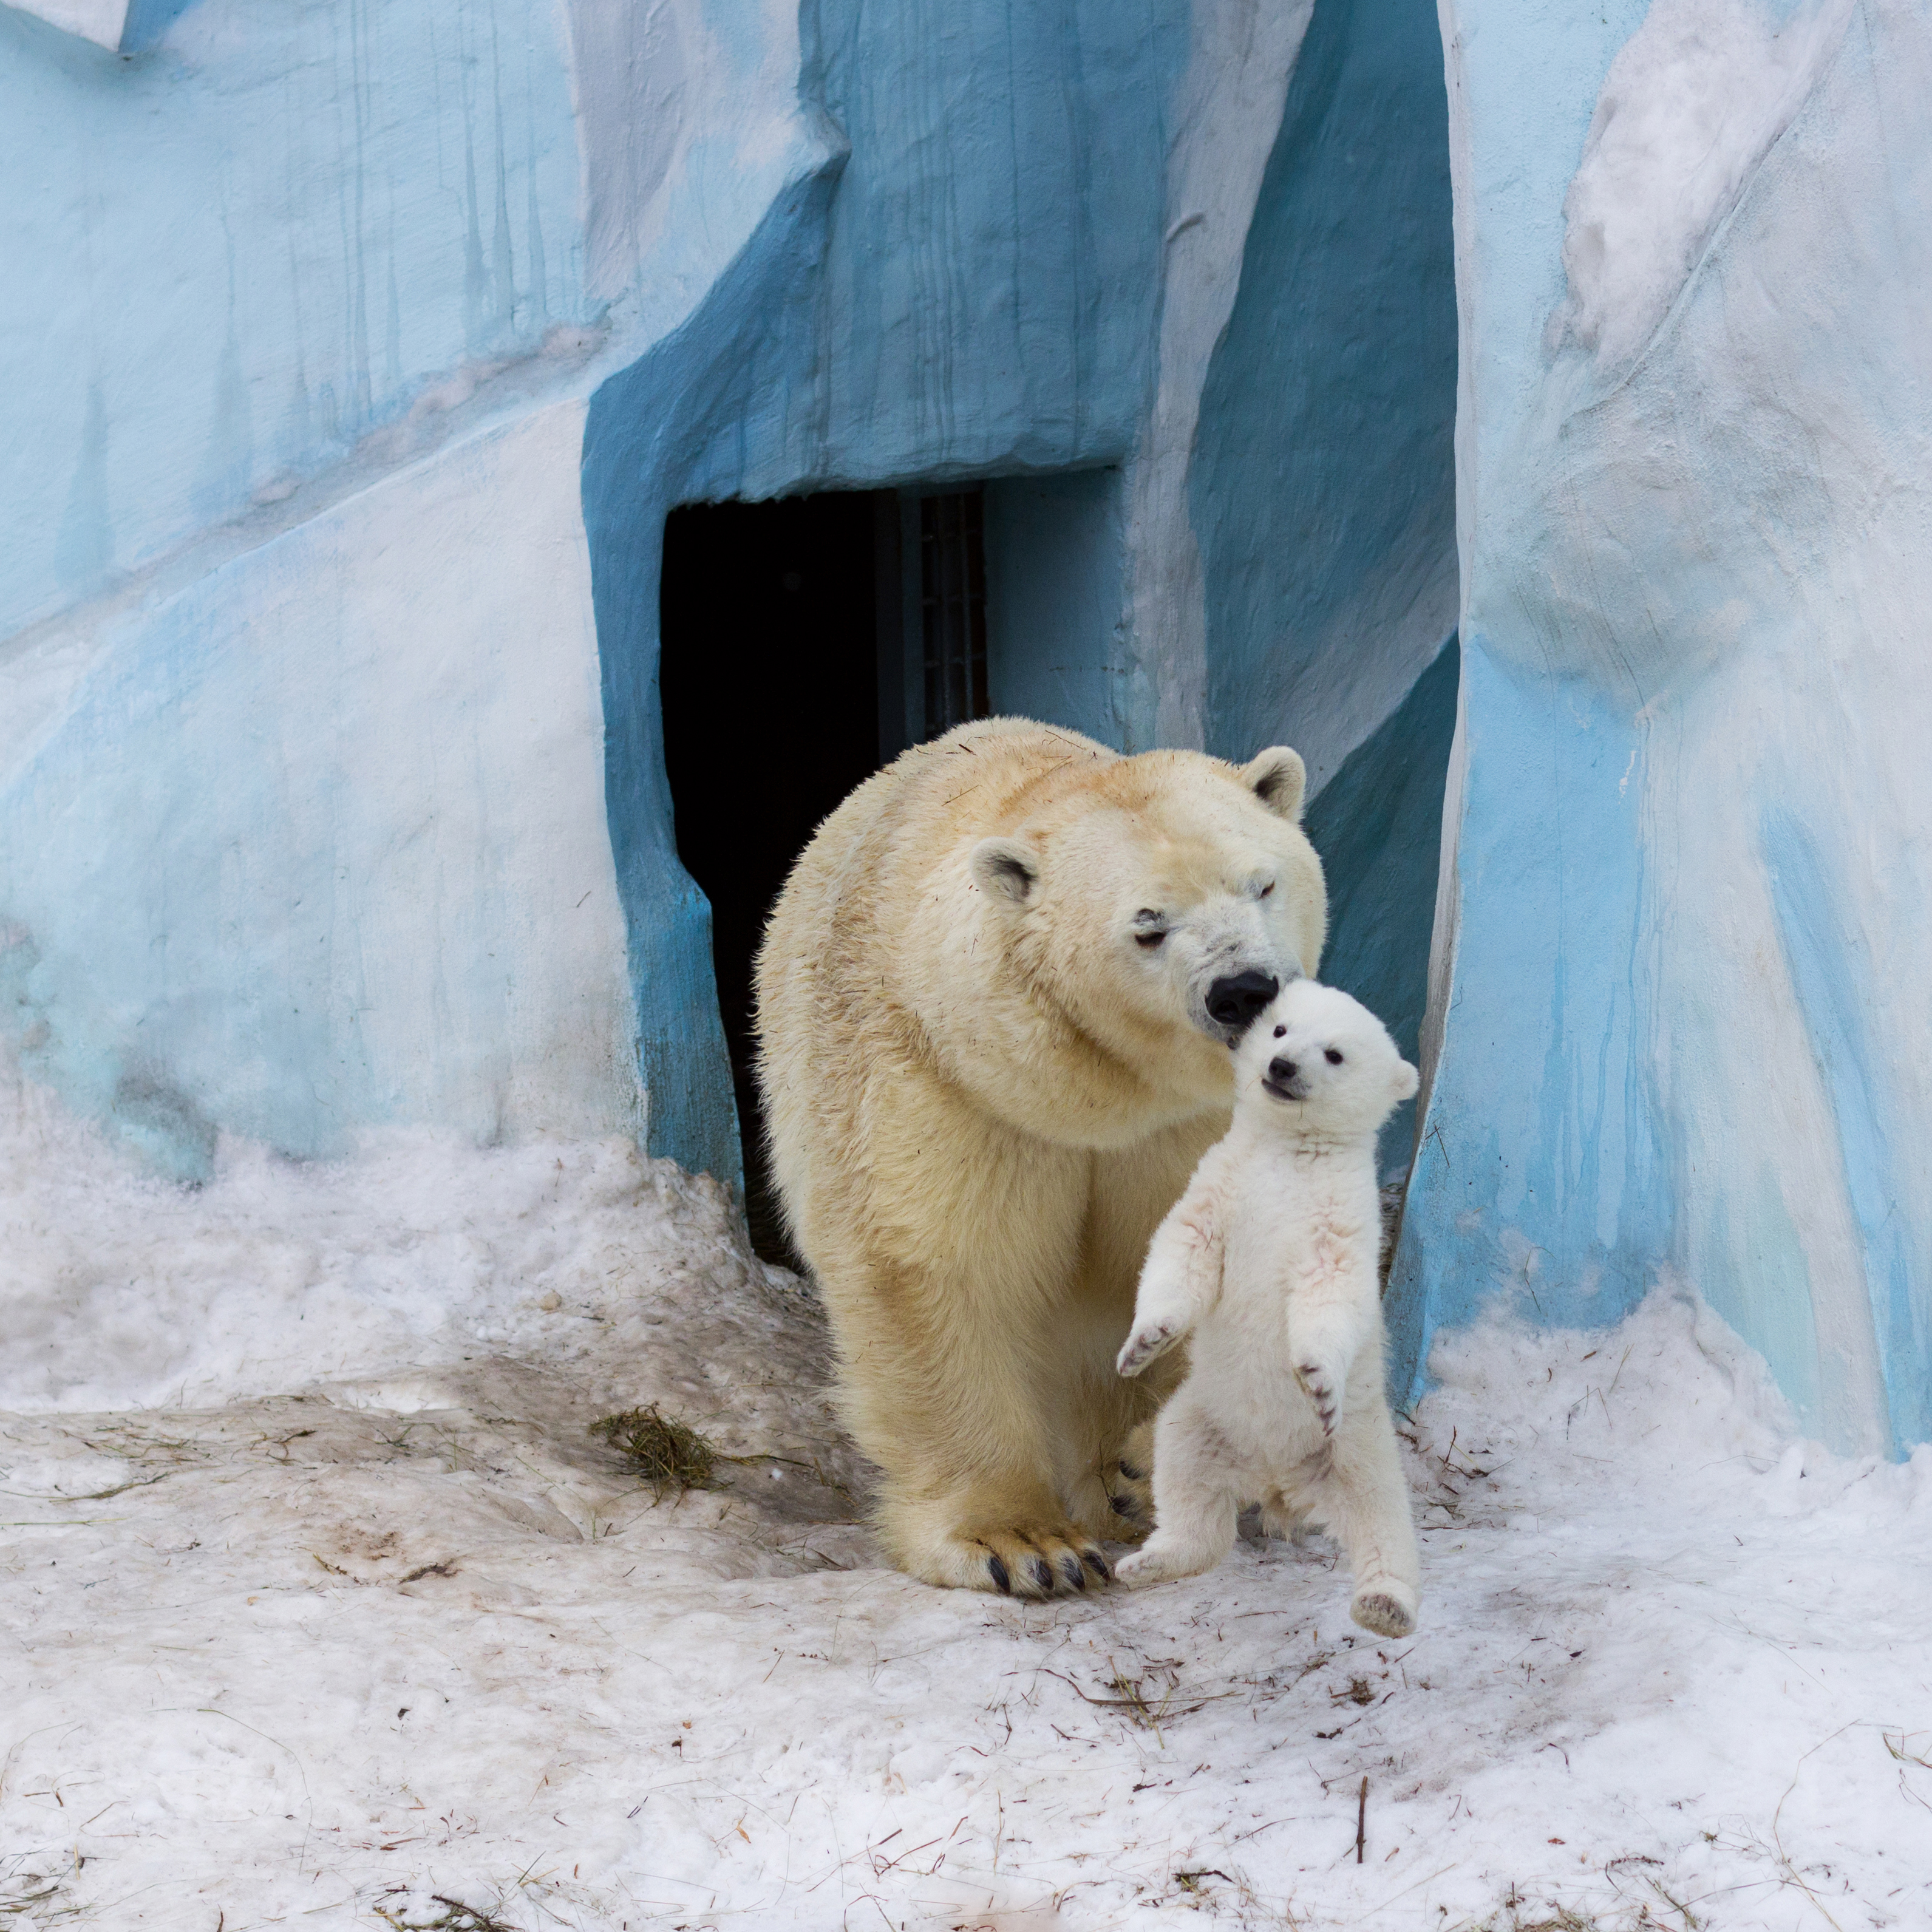 mama and baby polar bear at zoo in winter